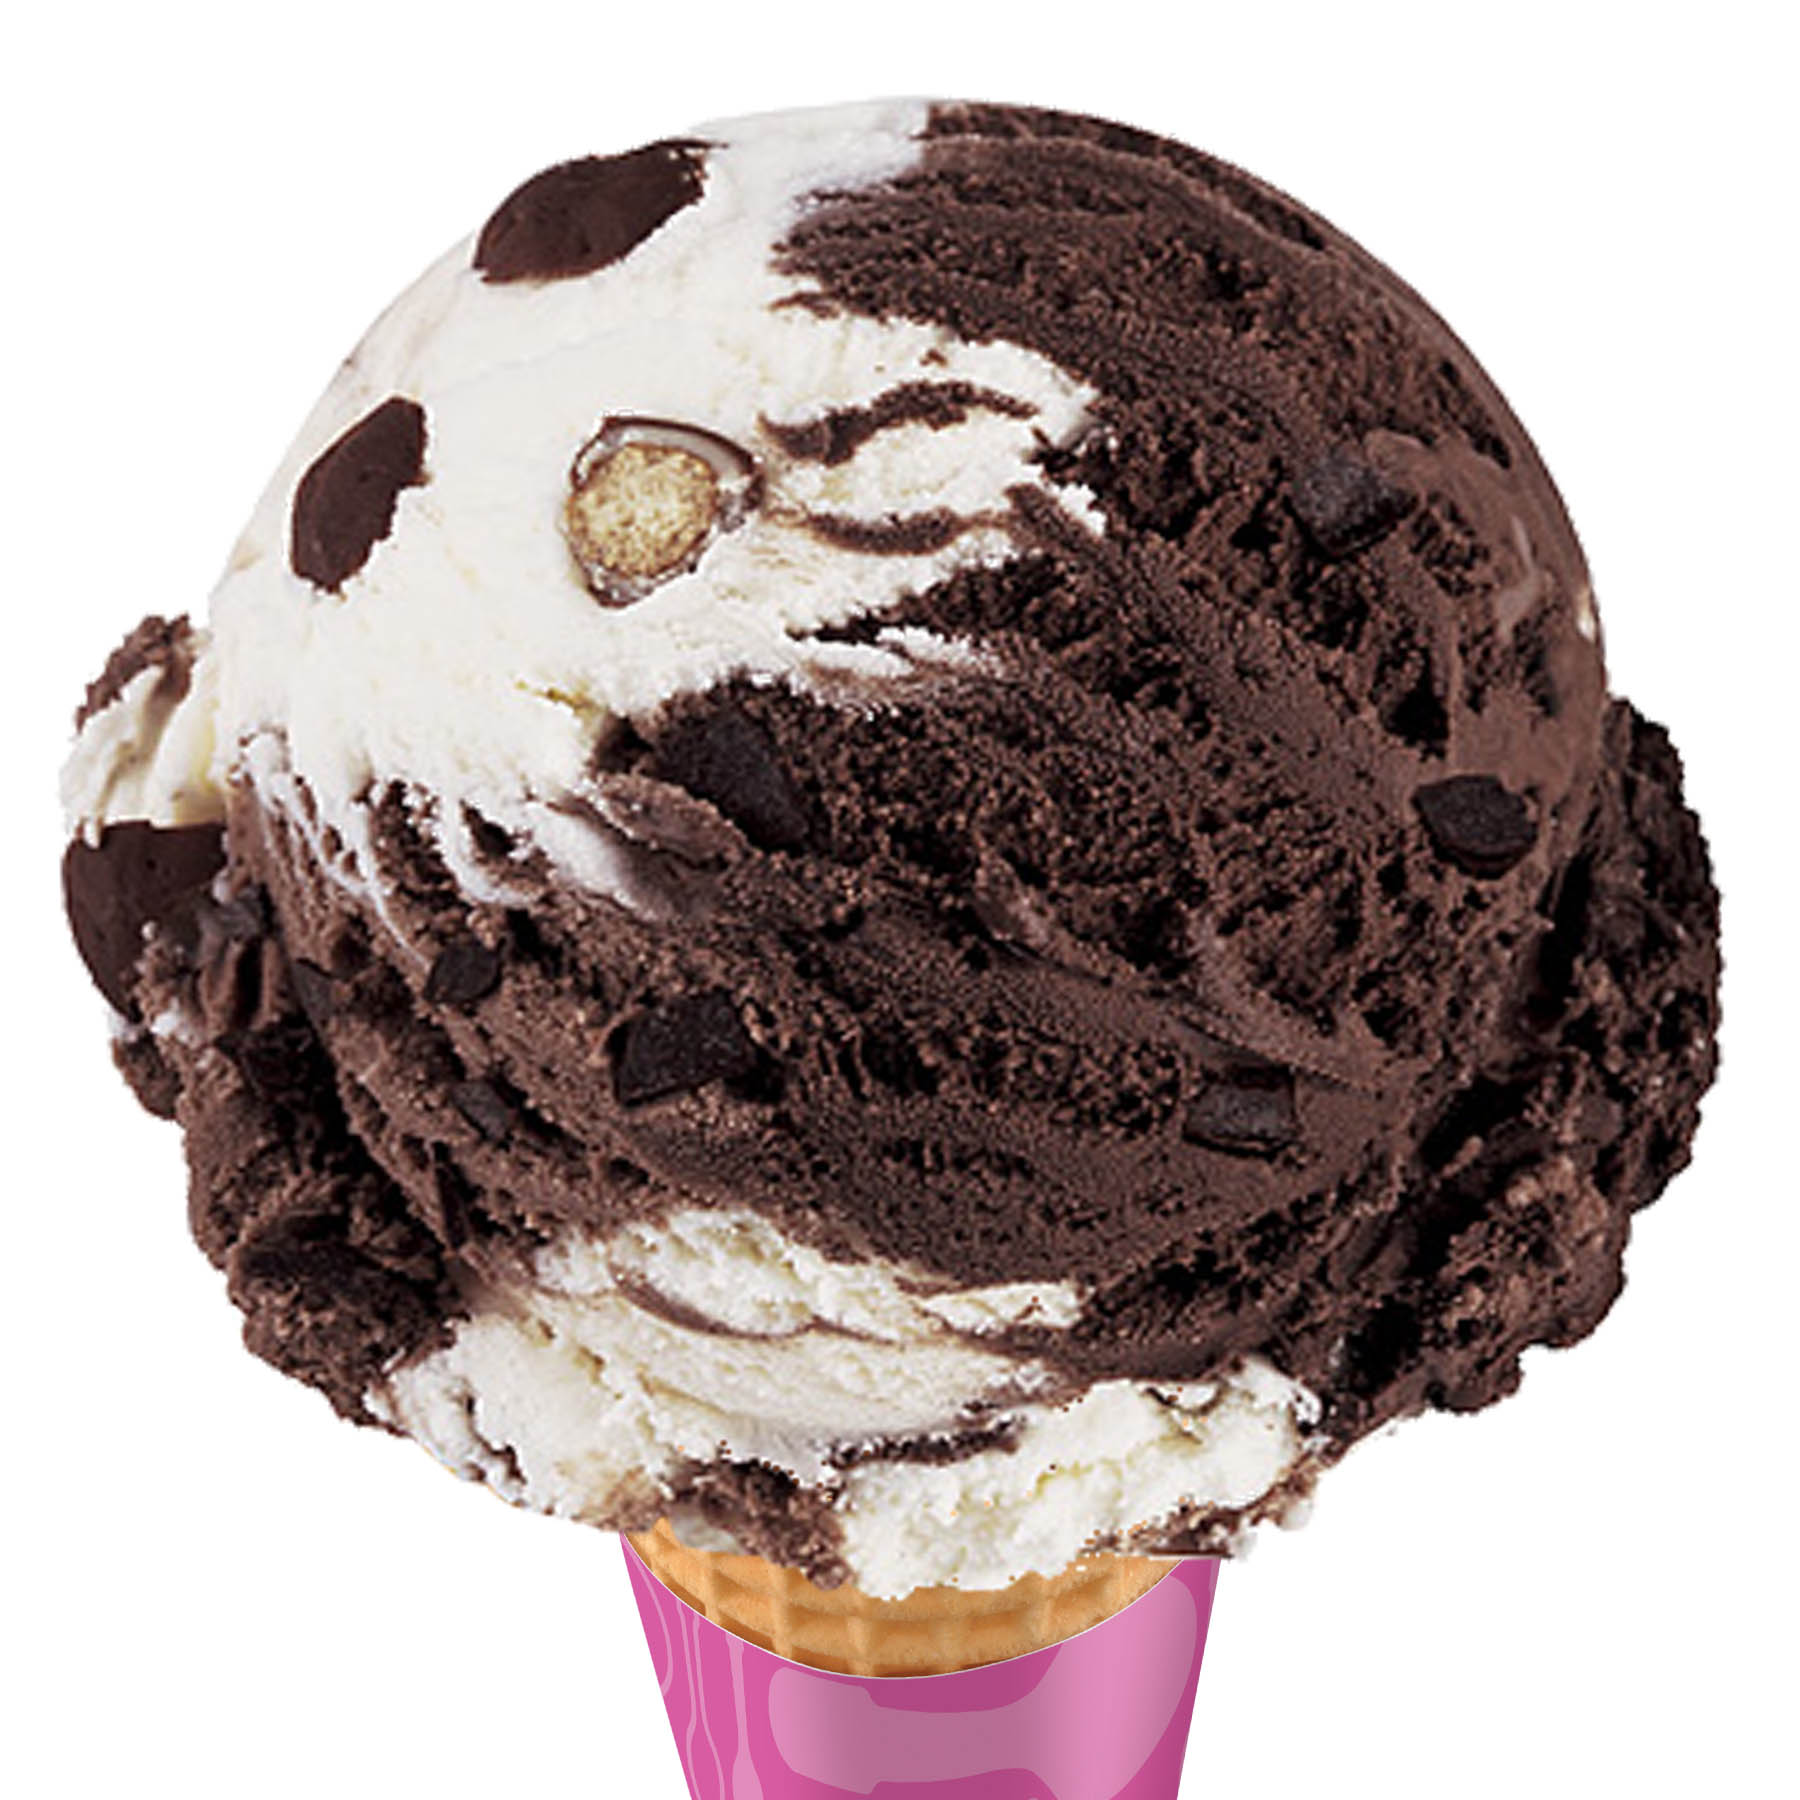 10 must-try ice cream flavors of Baskin-Robbins - MegaBites Ice Cream Flavors Pictures